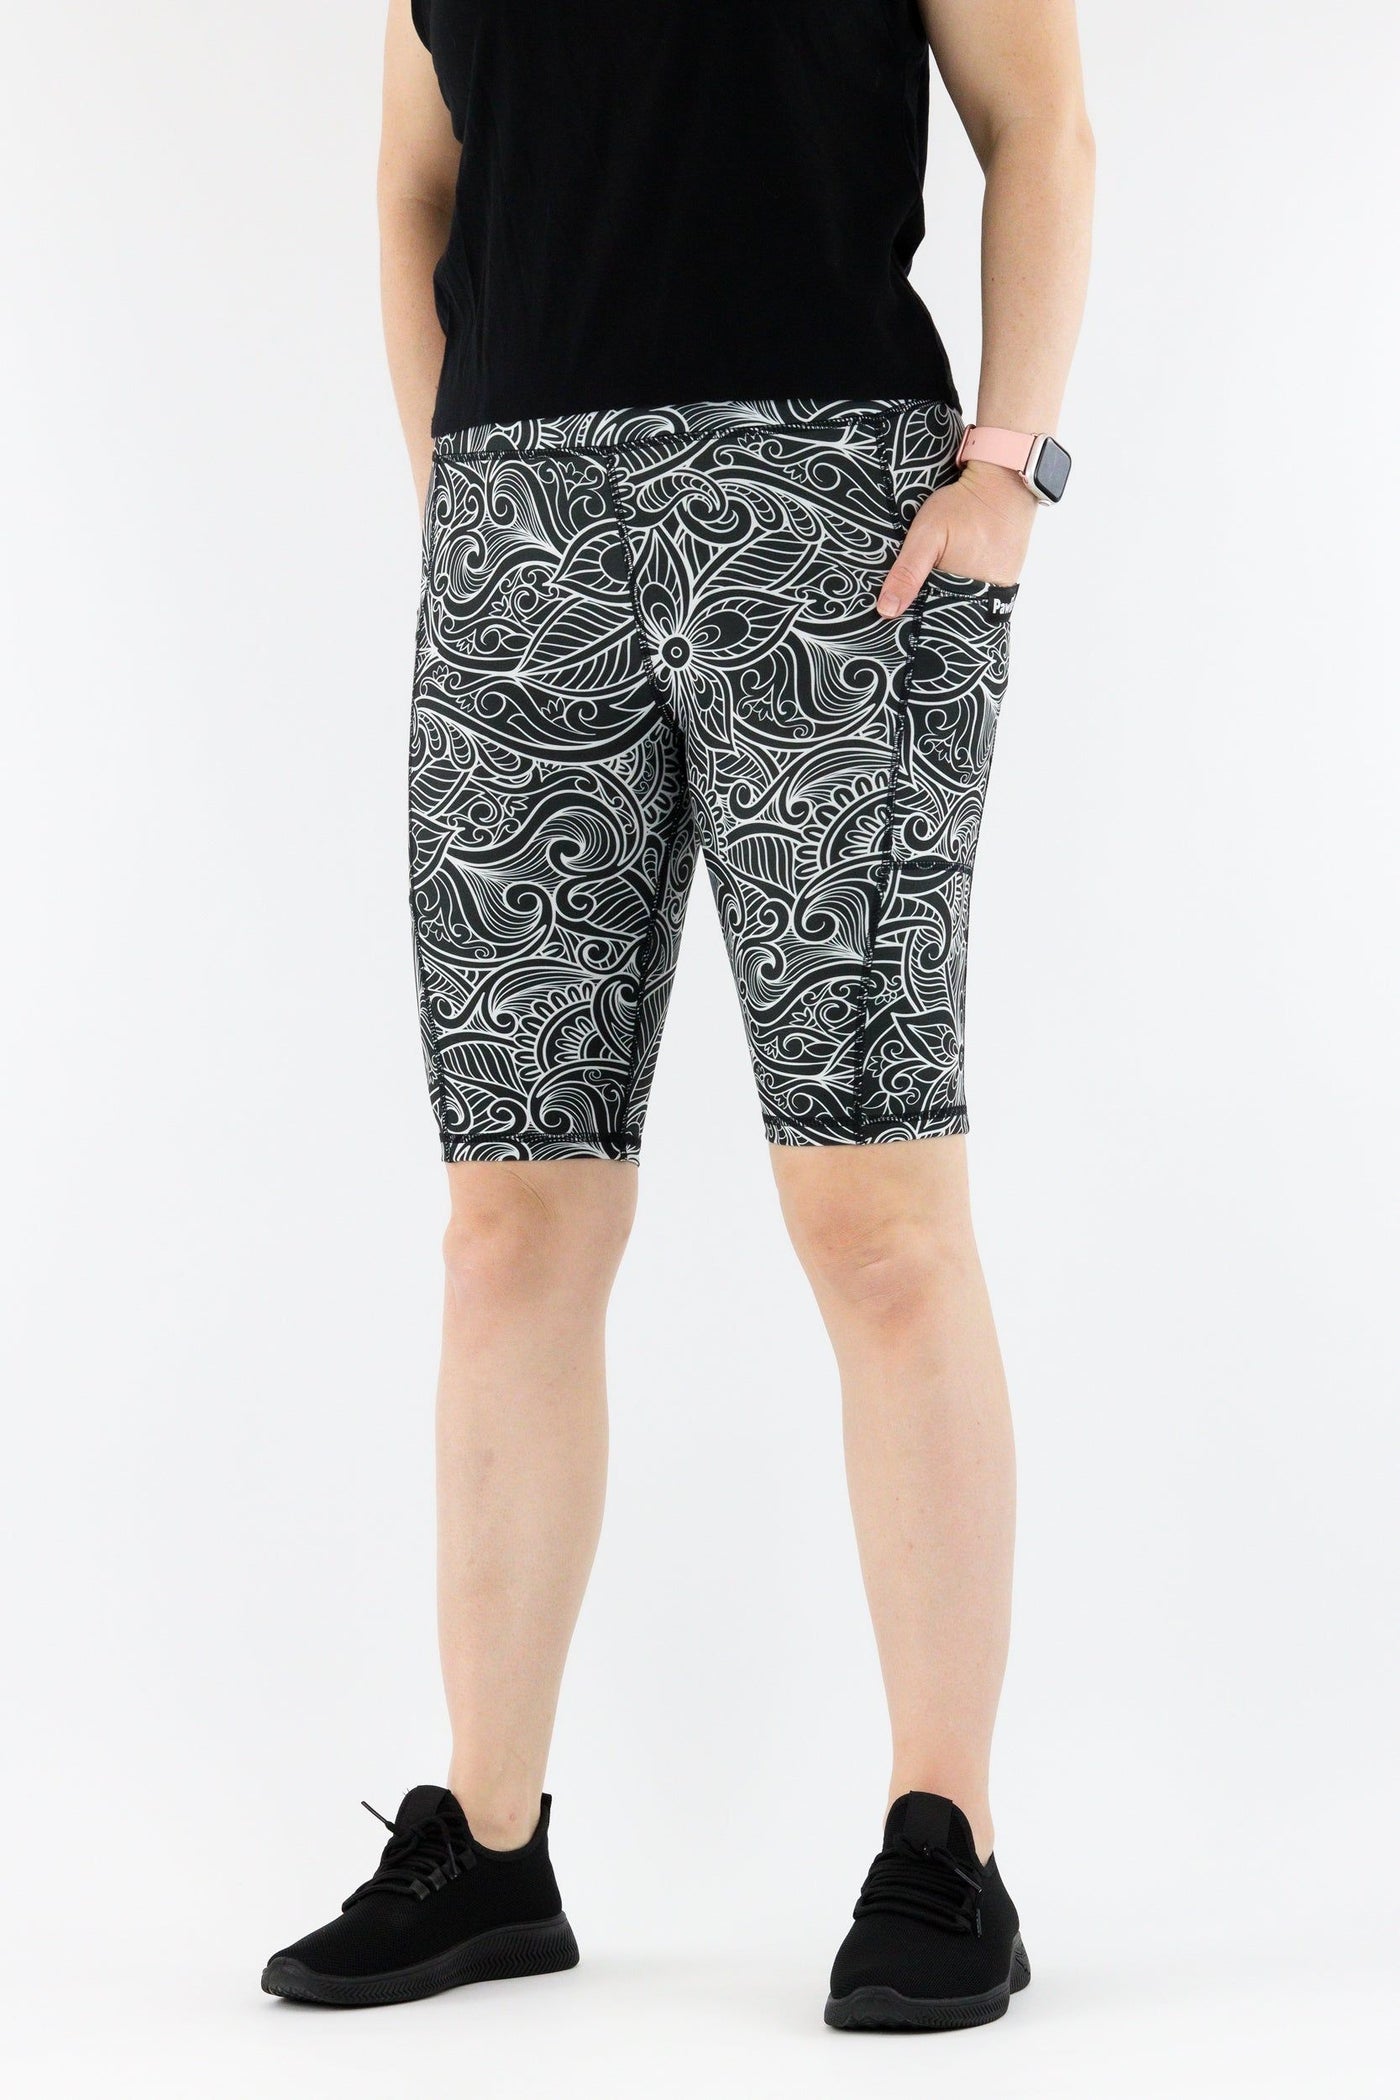 Monochrome Paisley - Hybrid 1.0 - Leg Pockets - Long Shorts Hybrid Shorts Pawlie   